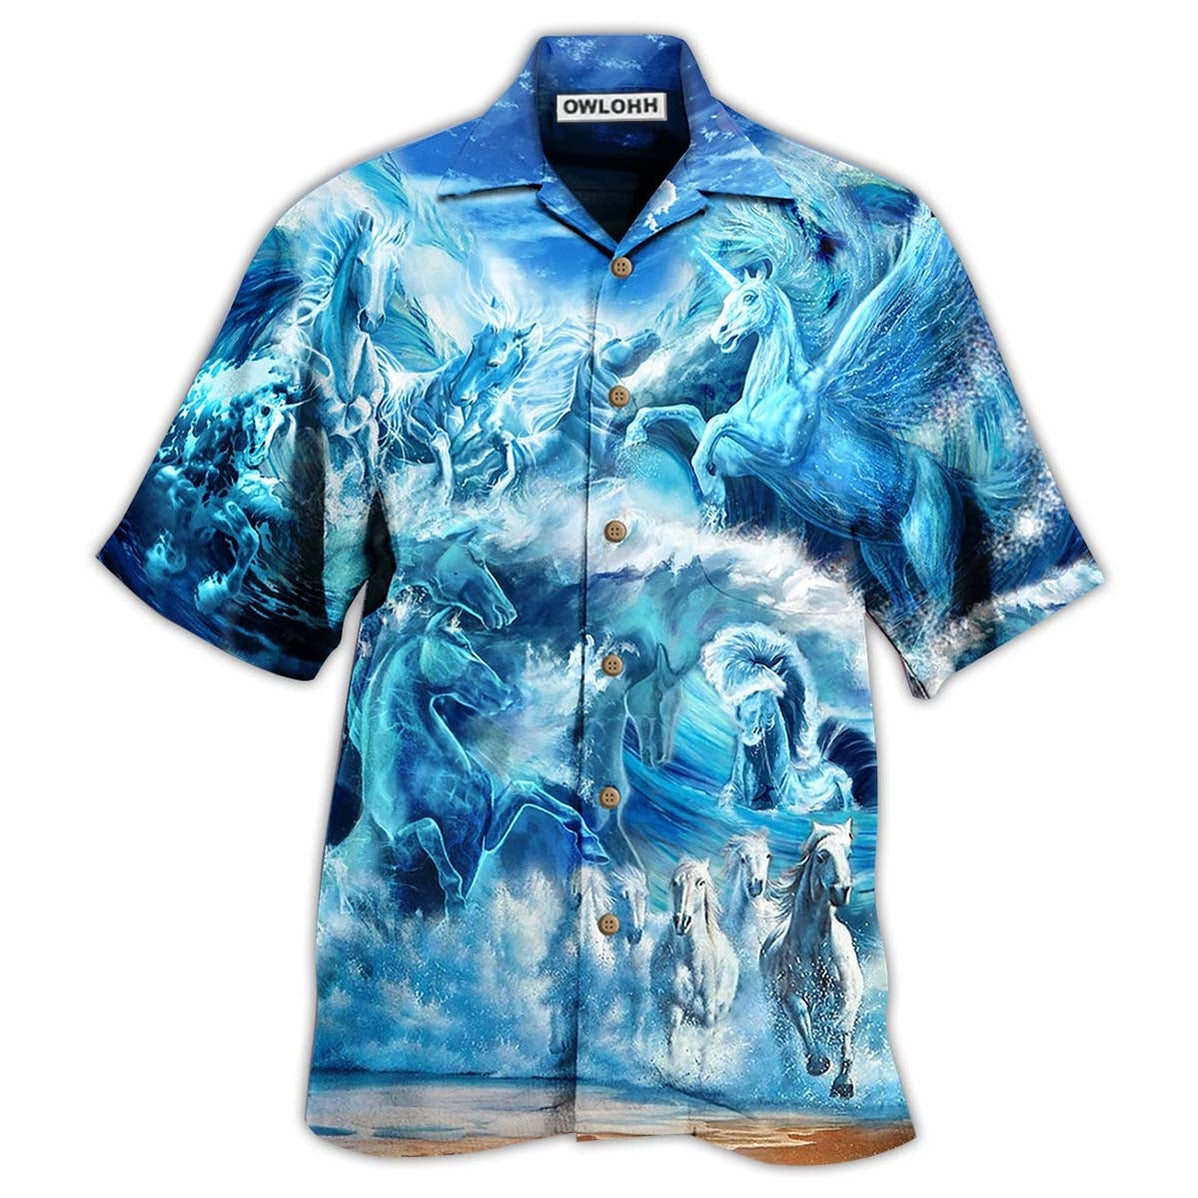 Hawaiian Shirt / Adults / S Horse Run To The Sea And Free The Souls - Hawaiian Shirt - Owls Matrix LTD